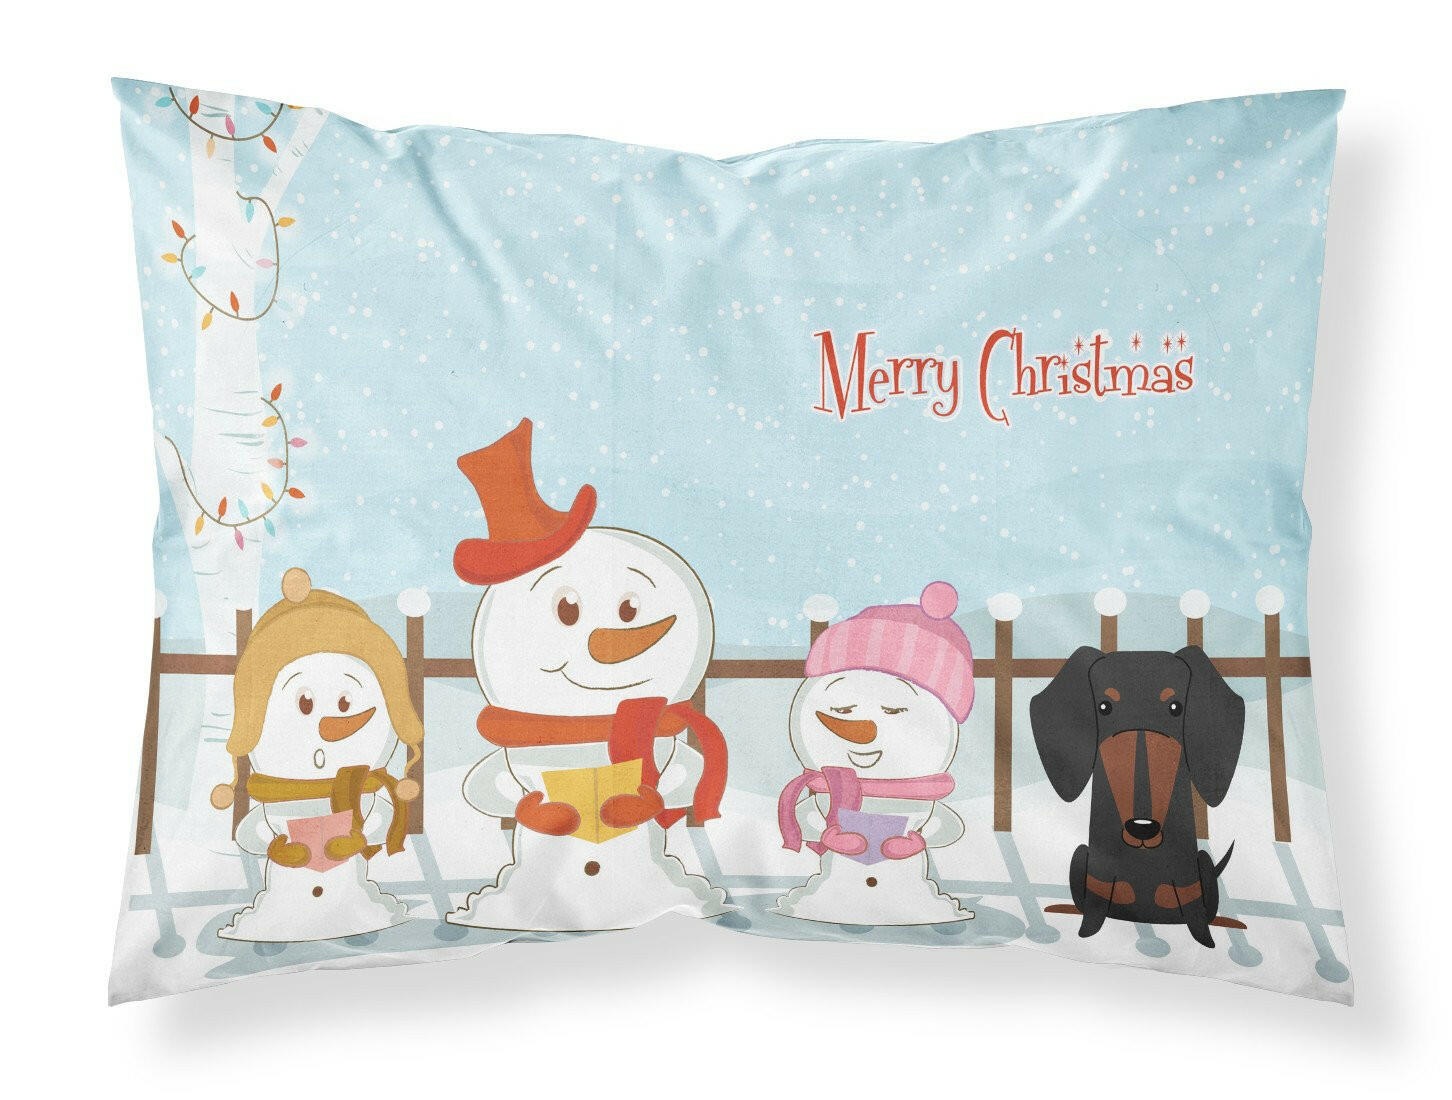 Merry Christmas Carolers Dachshund Black Tan Fabric Standard Pillowcase BB2463PILLOWCASE by Caroline's Treasures